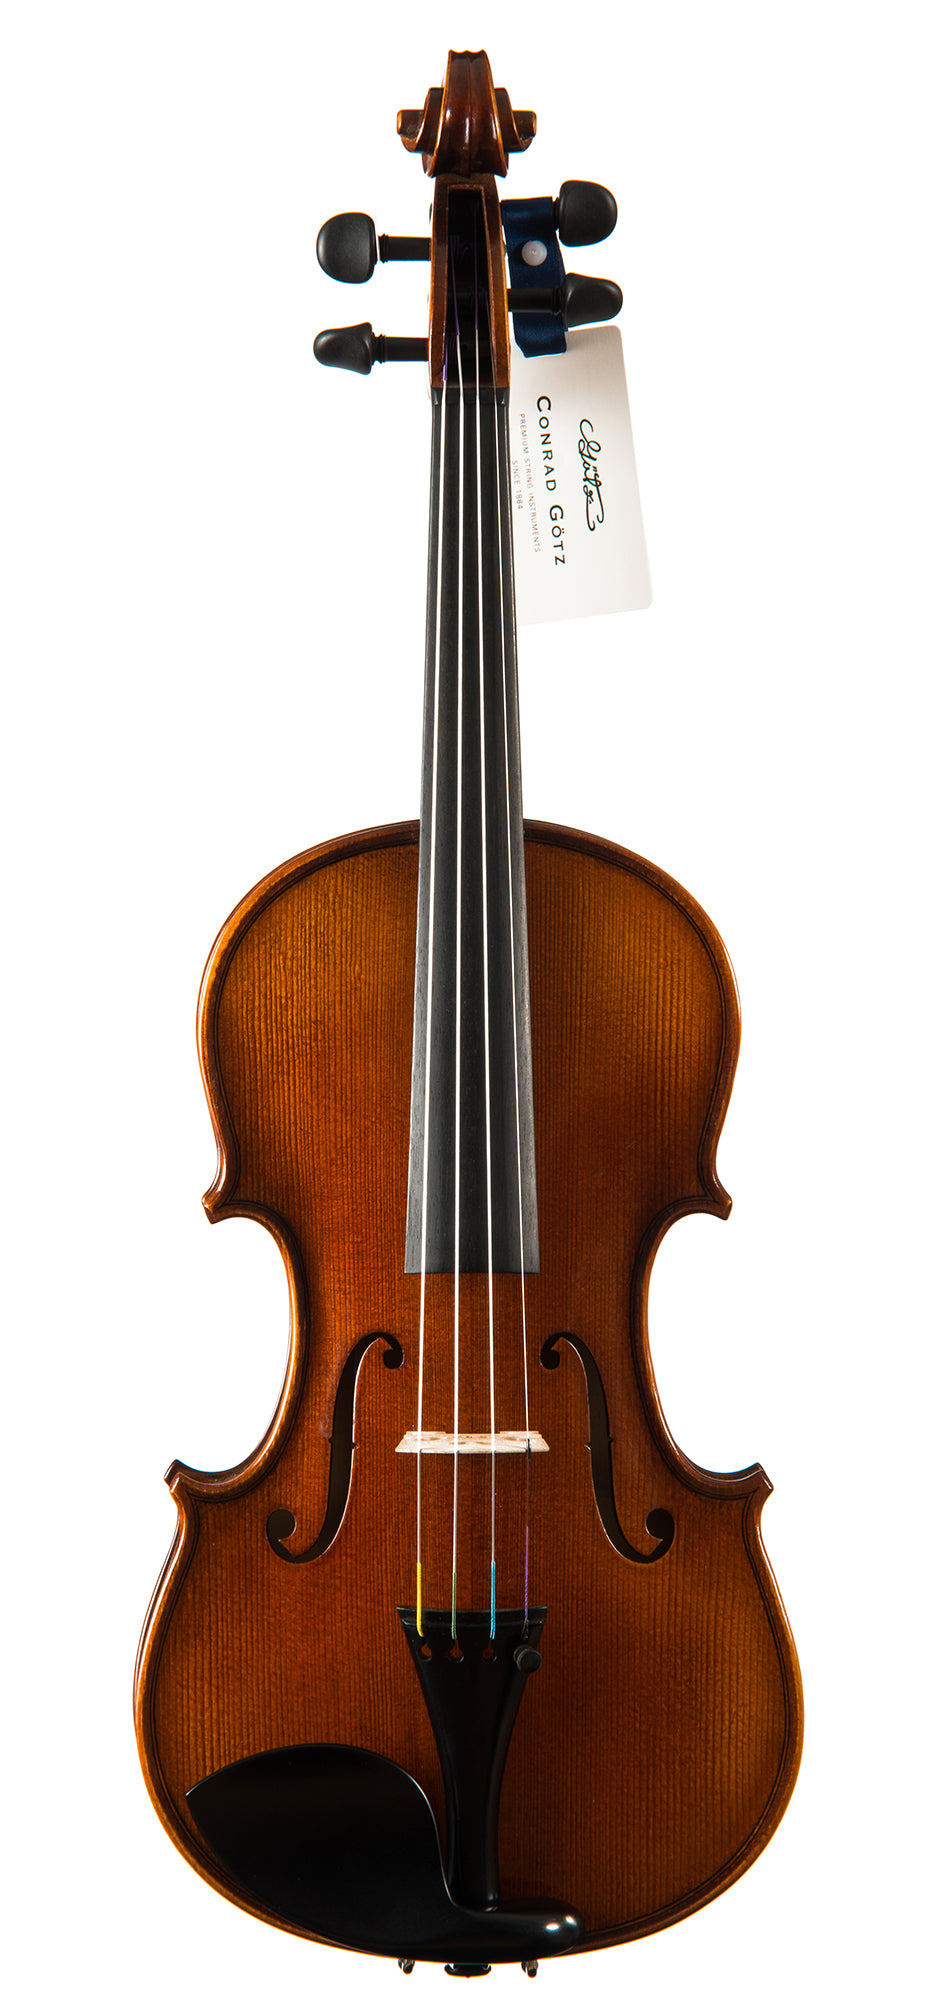 AUDITION Violine #98 AD